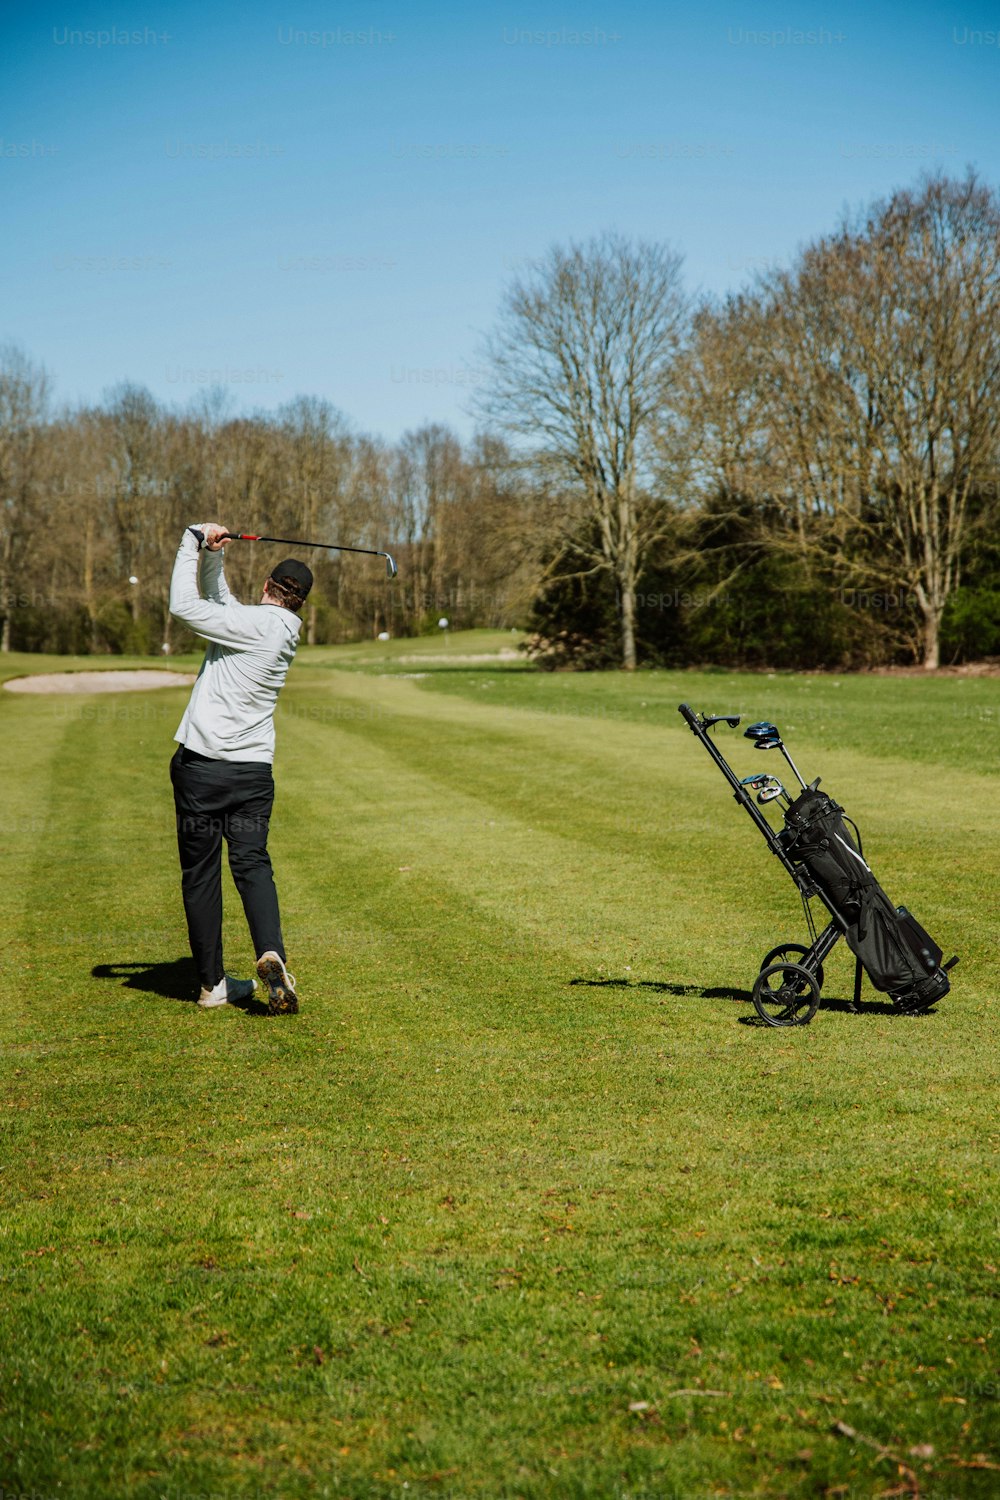 Un hombre balanceando un palo de golf en una pelota de golf